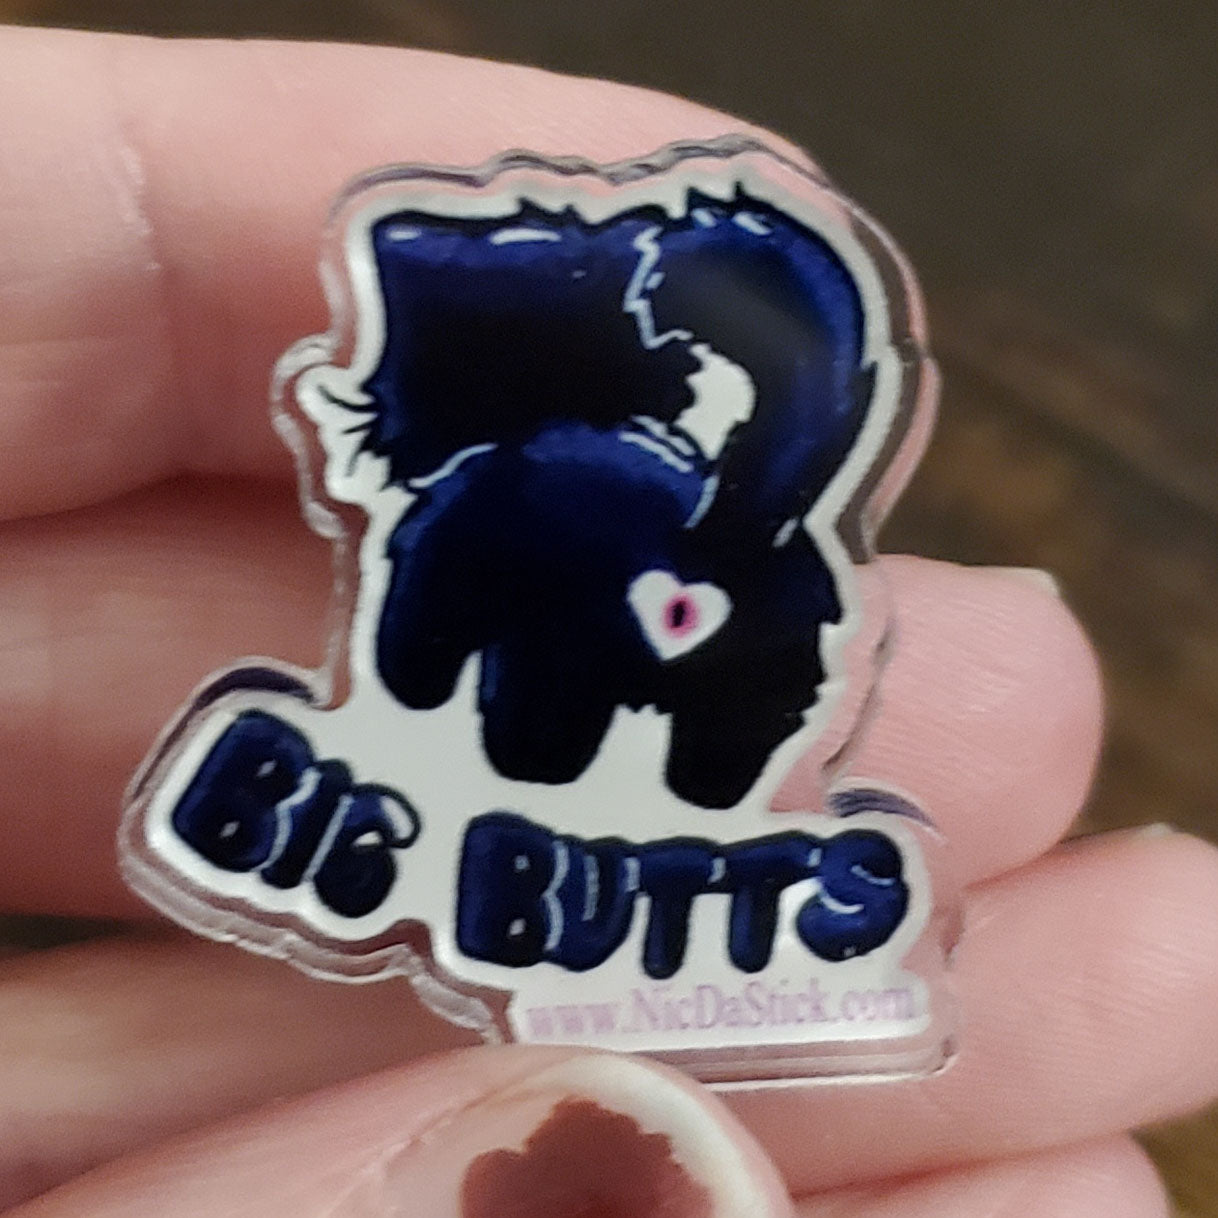 I love Big Butts - Black Kitty Butt Pin  "Sam"